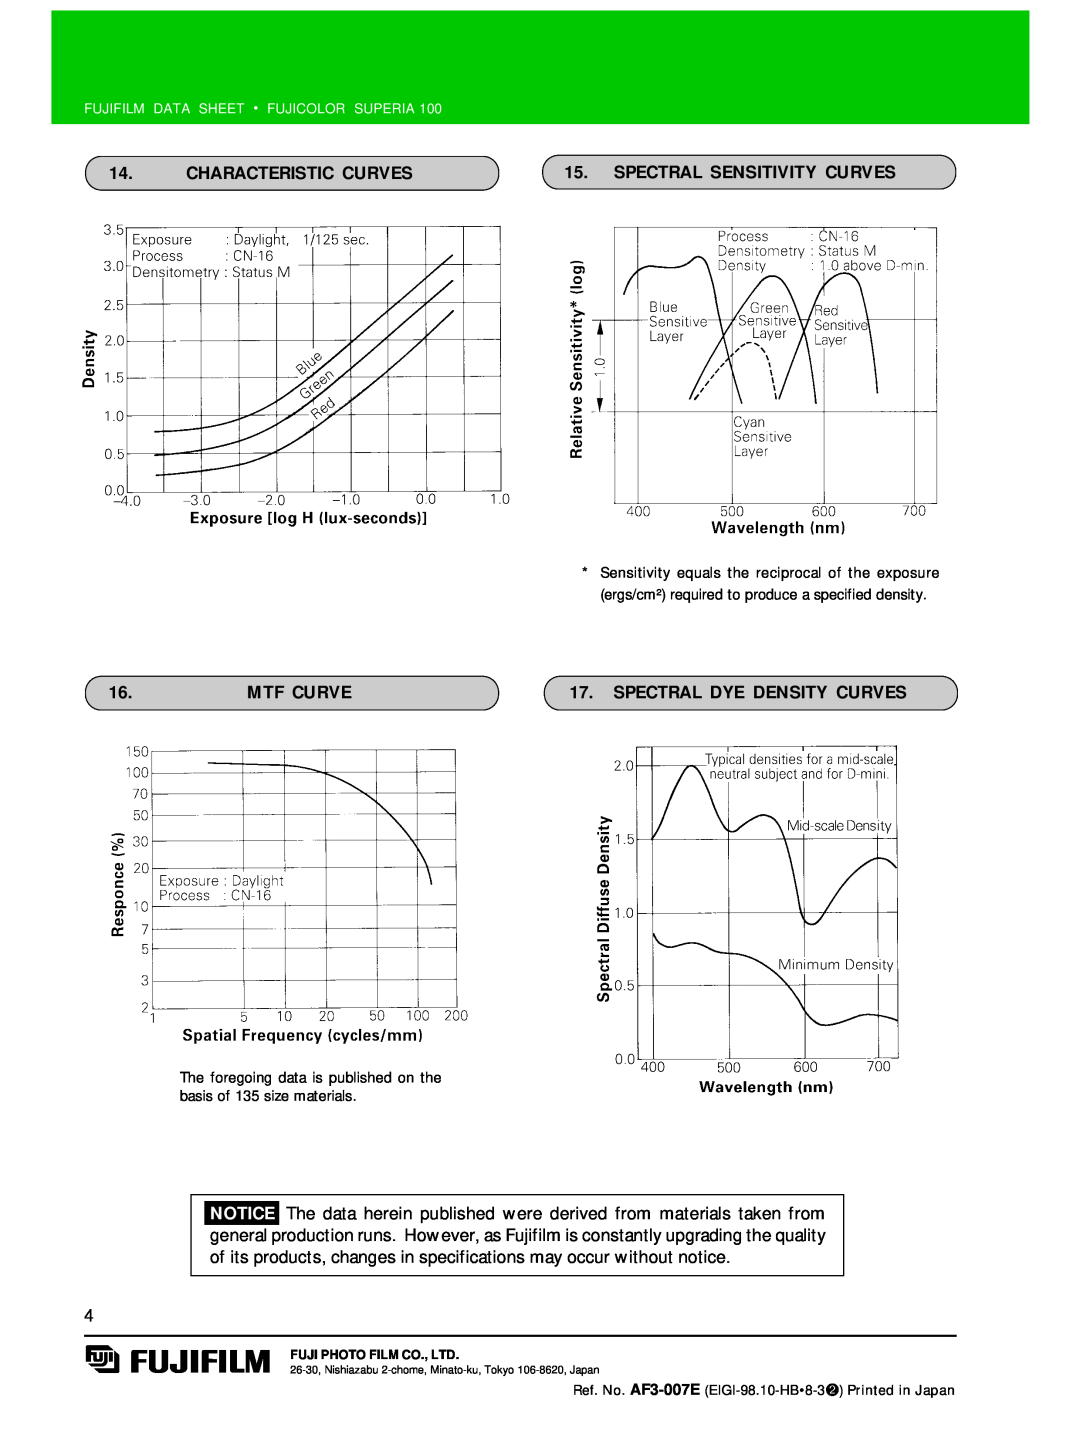 FujiFilm AF3-007E manual Characteristic Curves, Spectral Sensitivity Curves, Mtf Curve, Spectral Dye Density Curves 